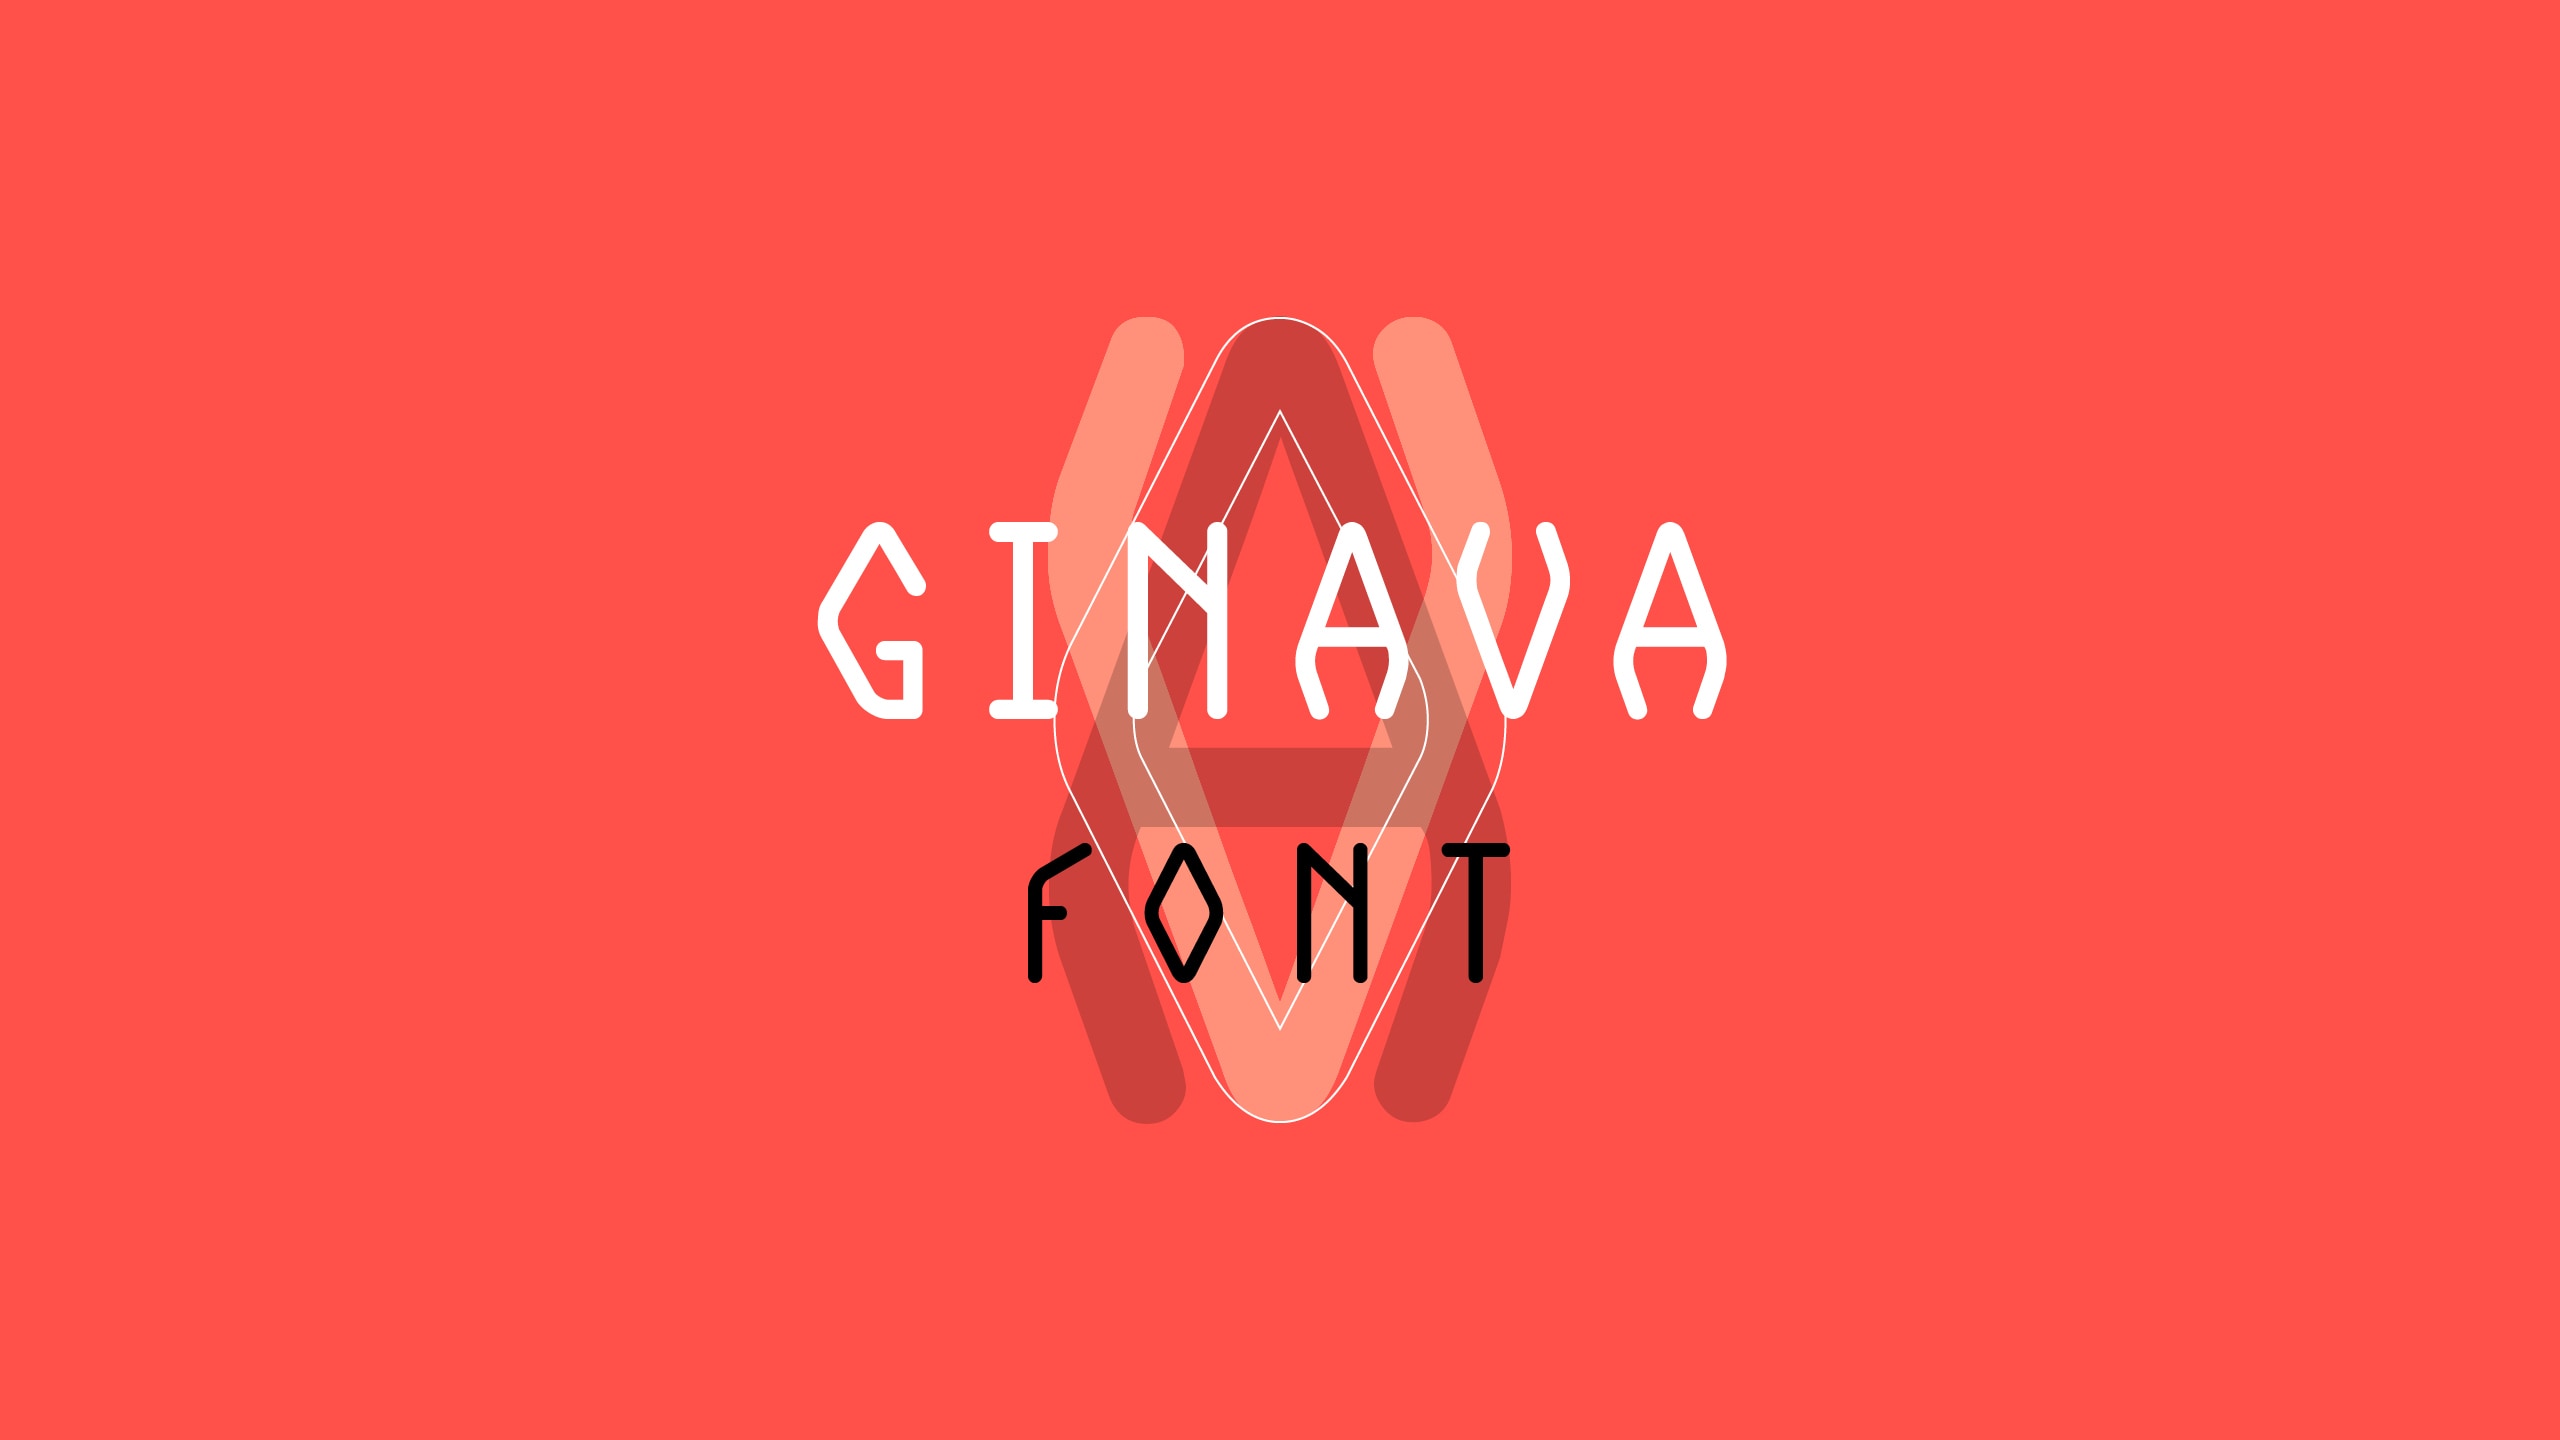 Ginava_1